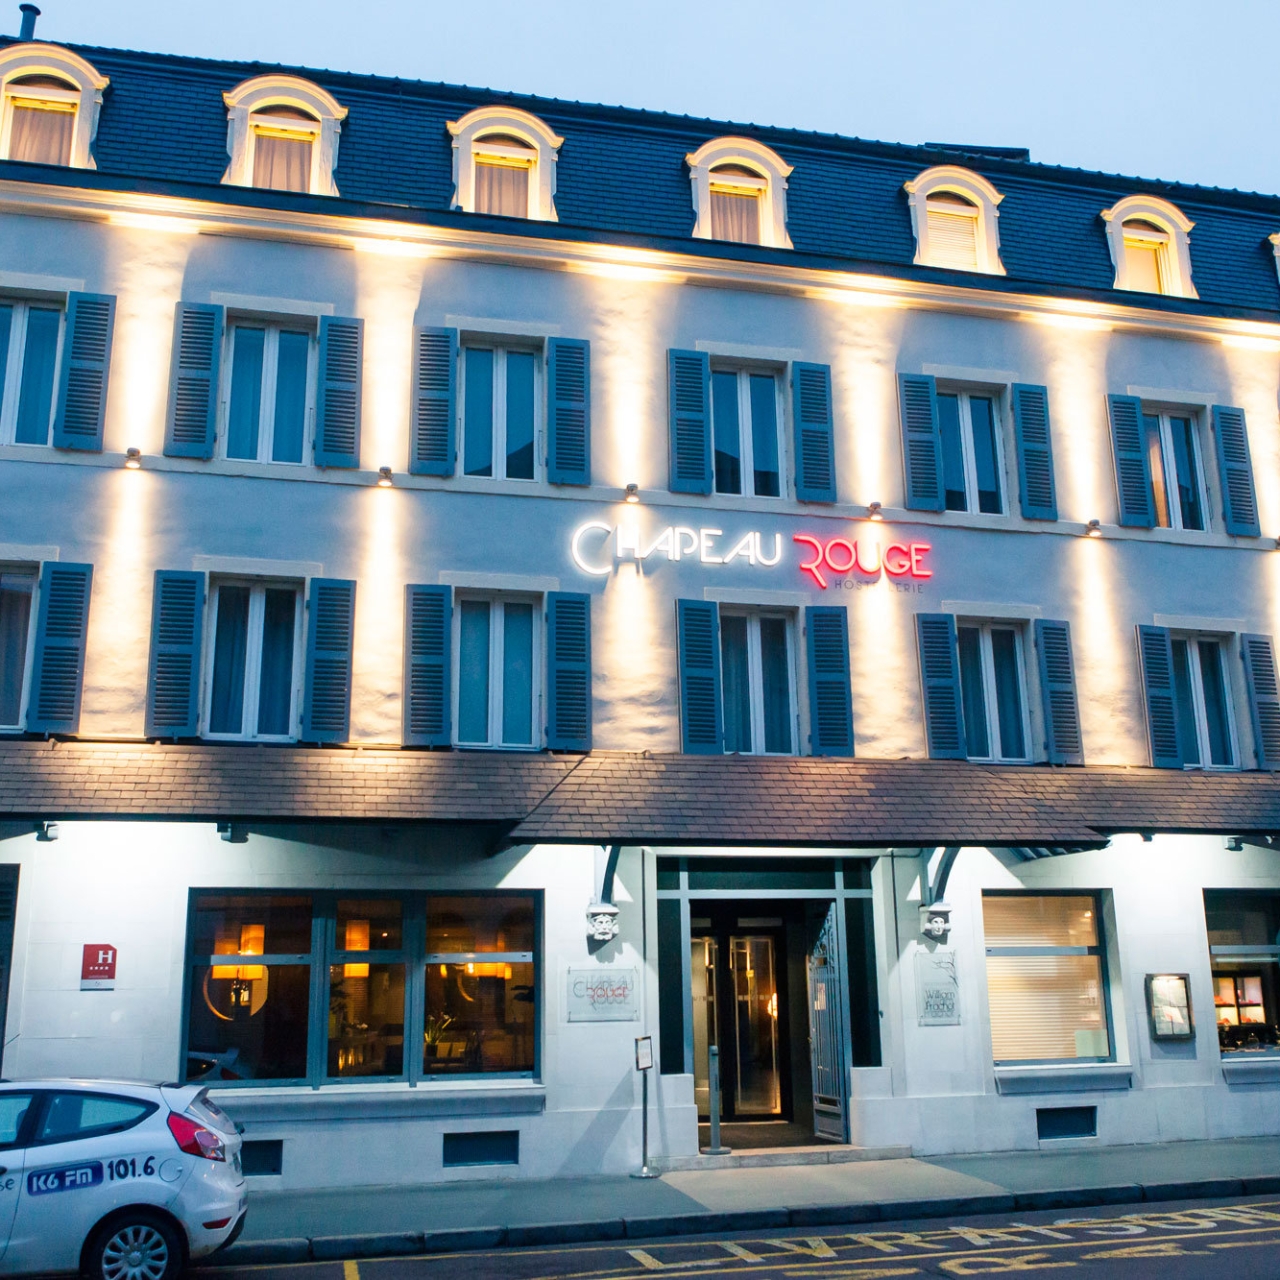 Hostellerie Du Chapeau Rouge - 4 HRS star hotel in Dijon (Burgundy)